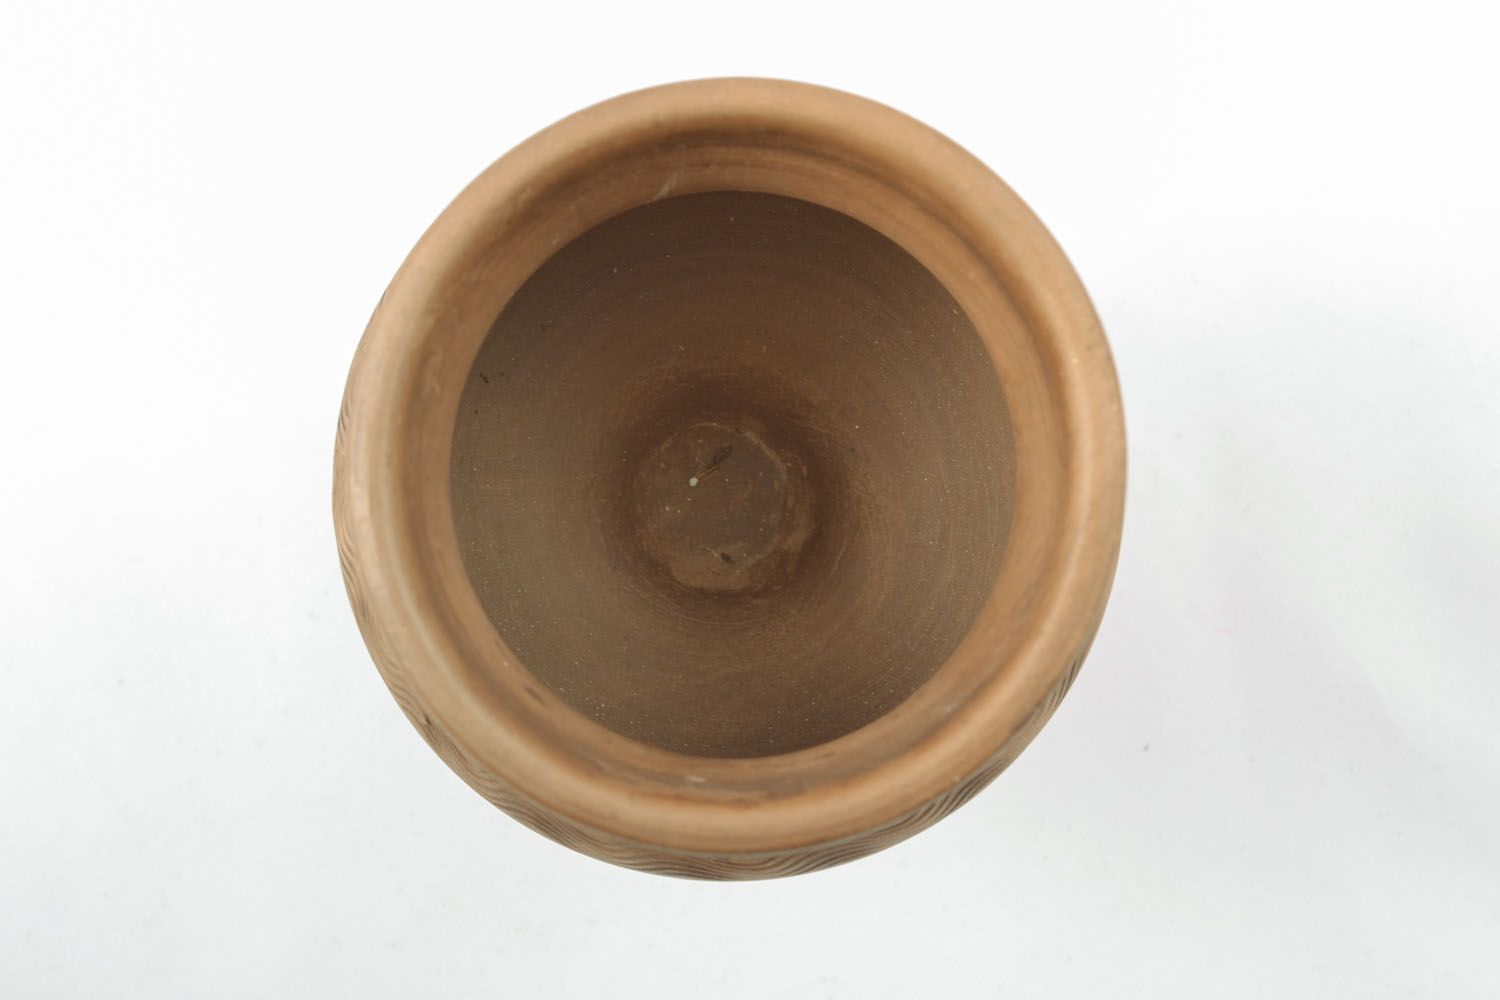 Homemade ceramic goblet photo 1